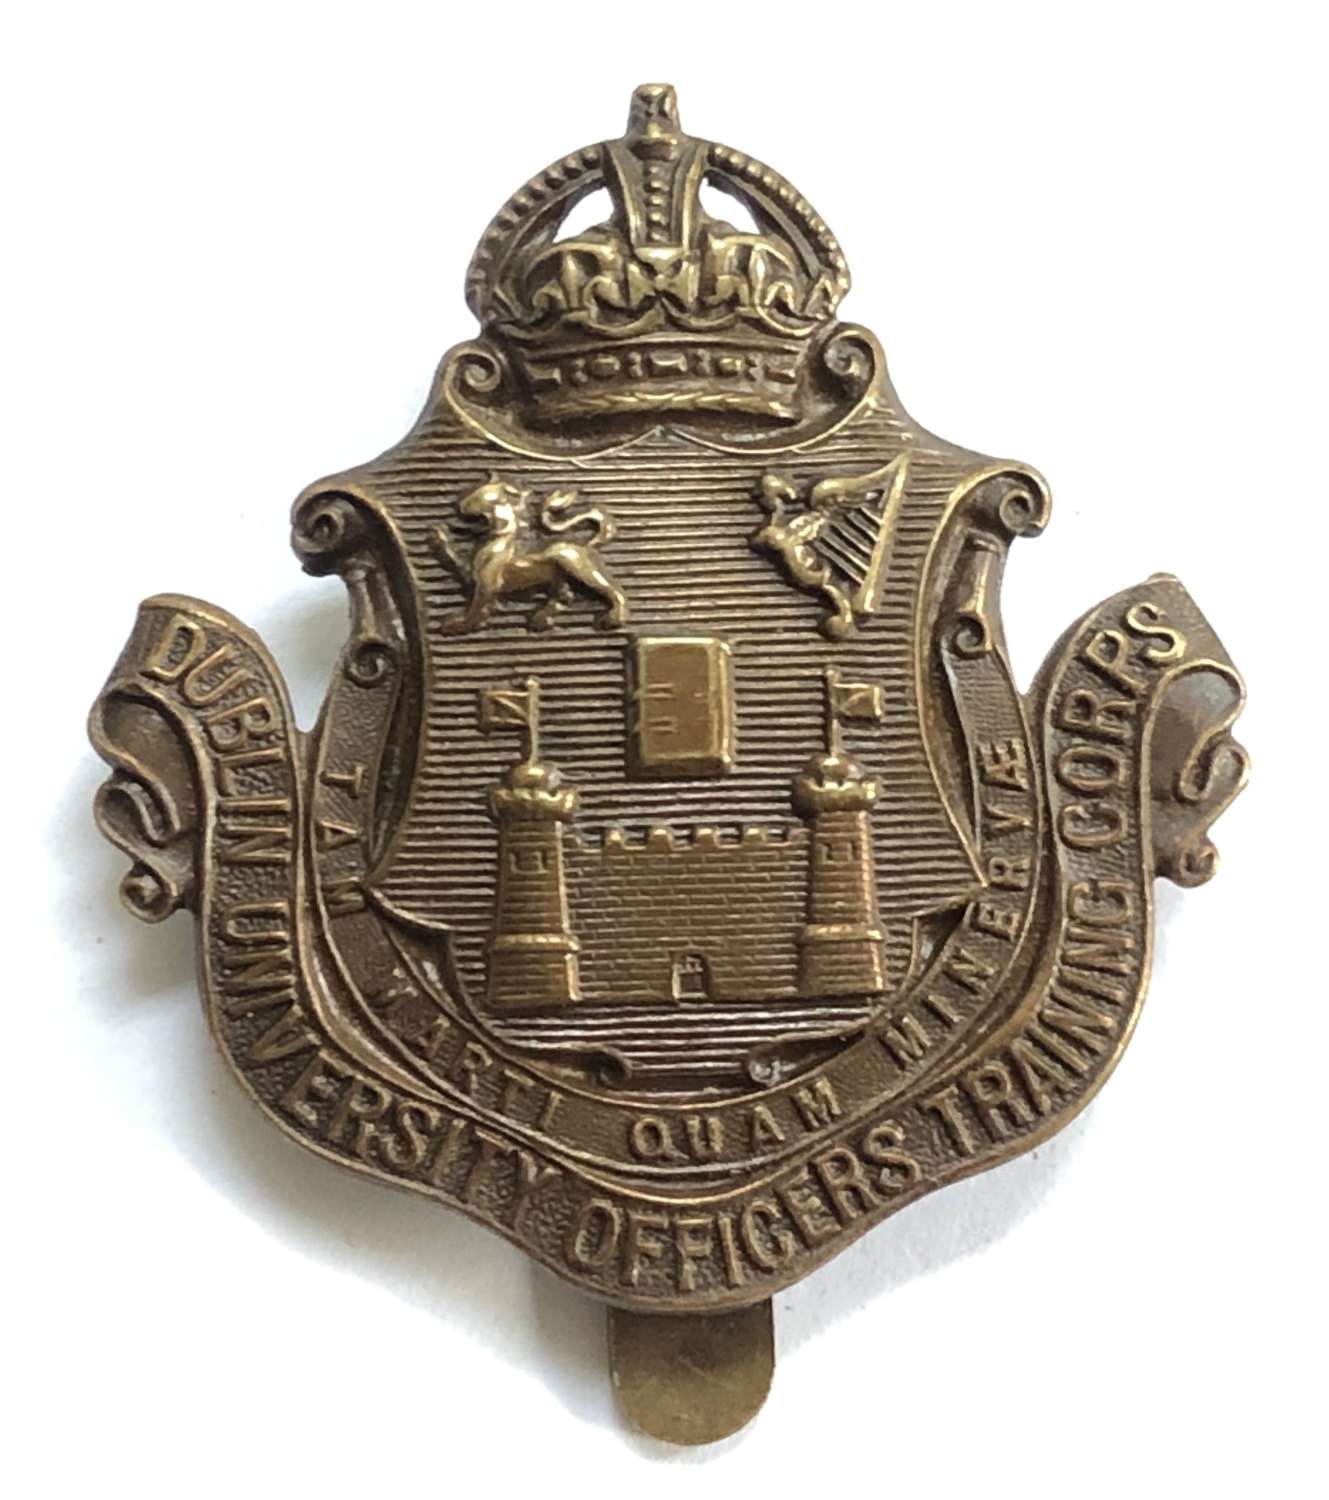 Irish. Dublin University pre 1922 Officers Training Corps cap badge